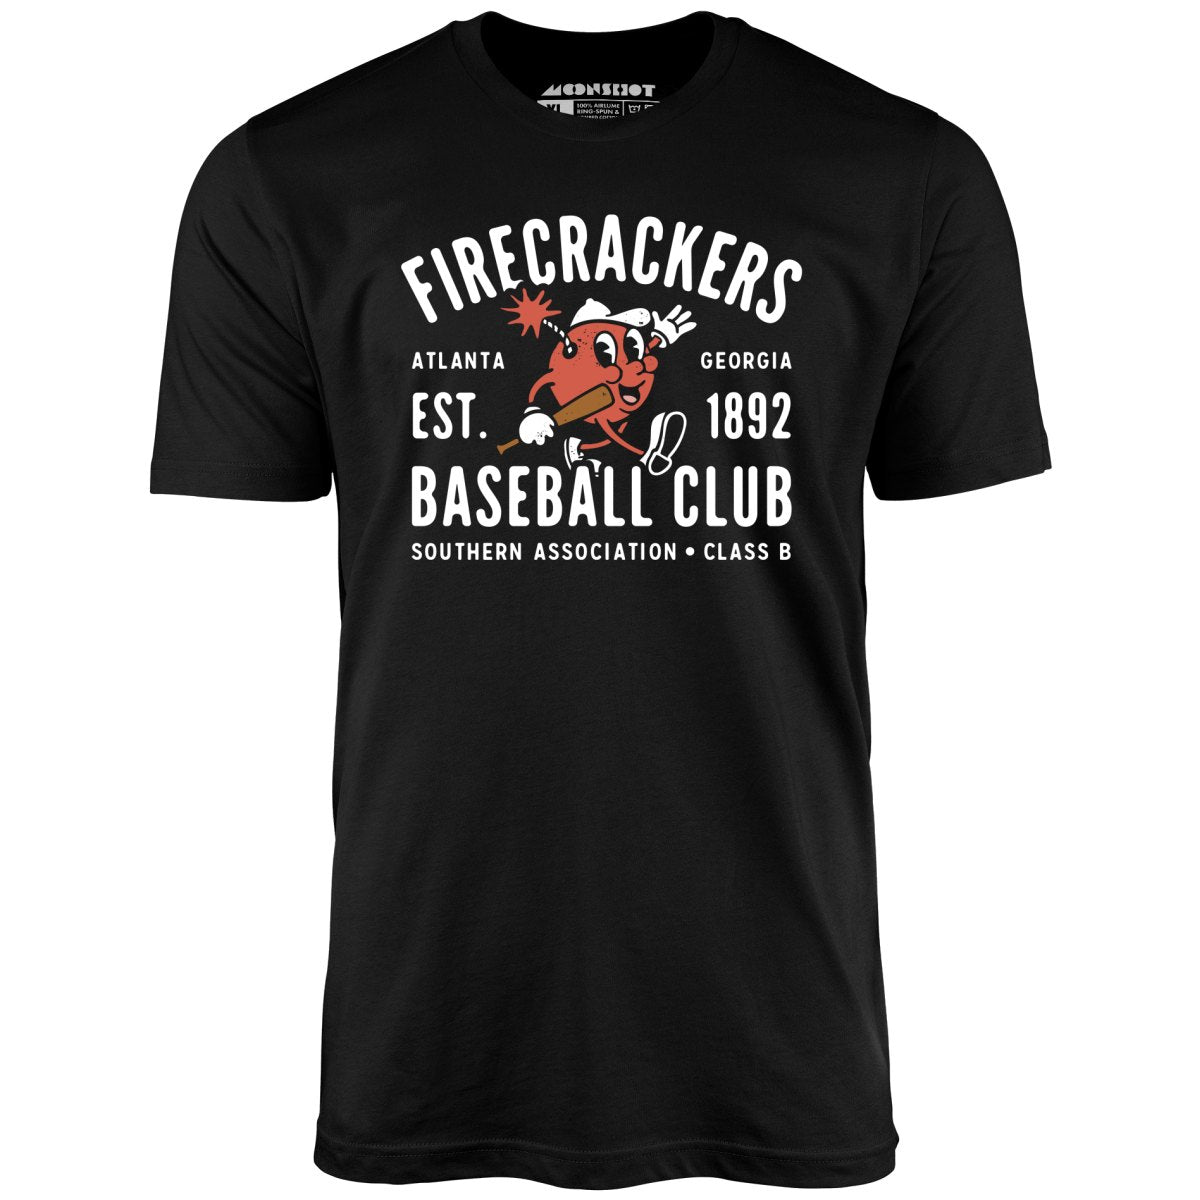 Atlanta Firecrackers - Georgia - Vintage Defunct Baseball Teams - Unisex T-Shirt